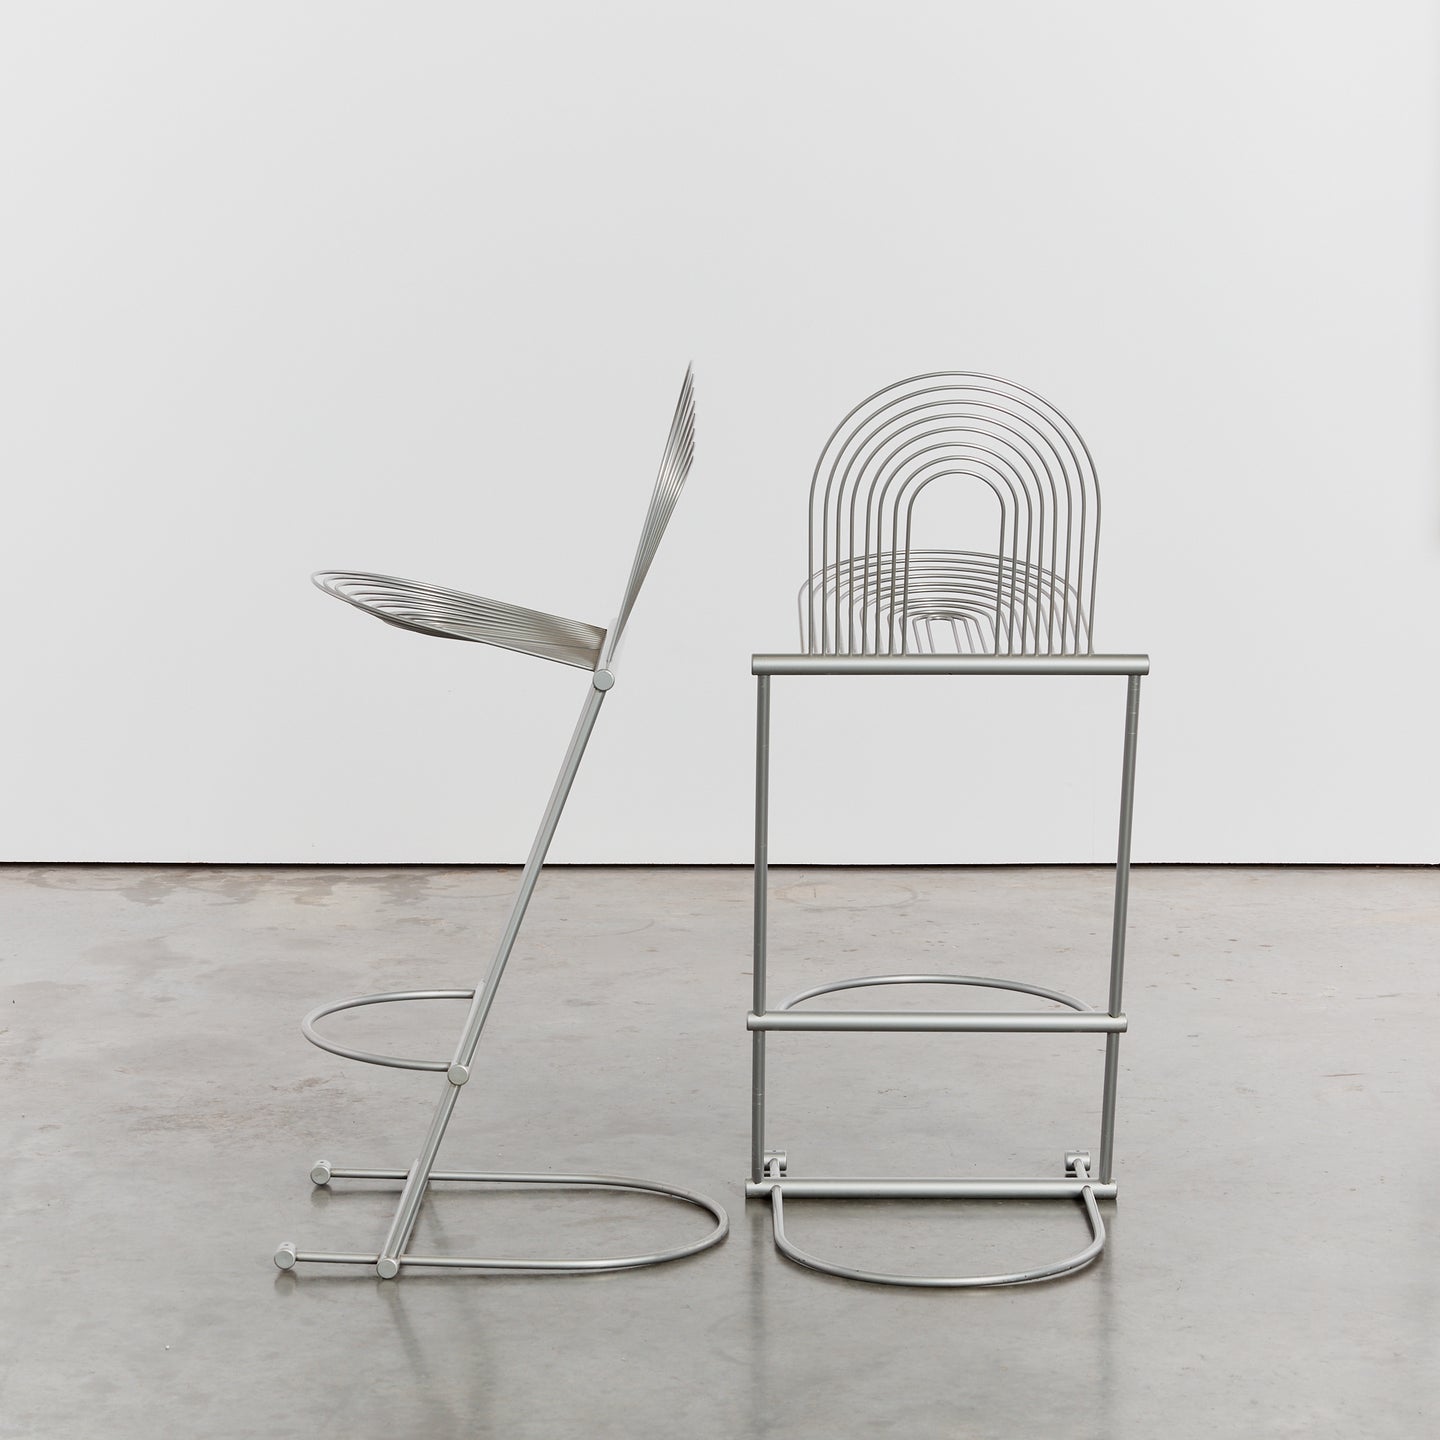 Pair of  swing bar stools by Jutta & Herbert Ohl for Rosenthal